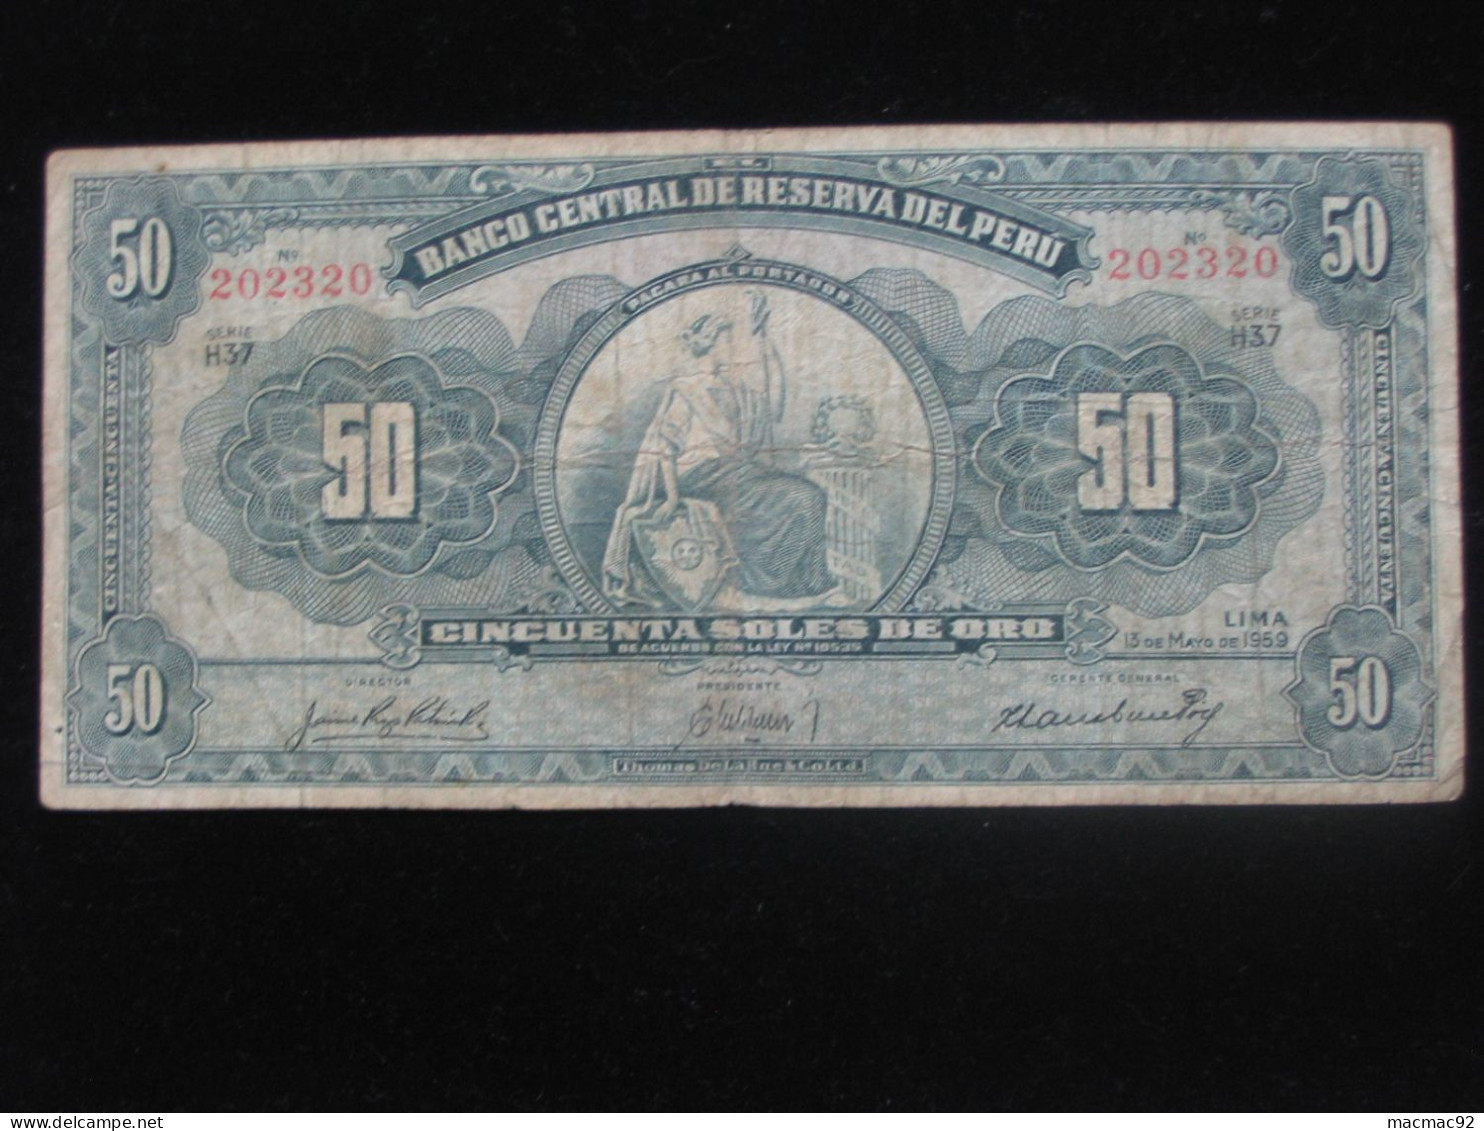 PEROU - 50 CINCUENTA SOLES DE ORO 1967 - Banco Central De Reserva Del Peru  **** EN ACHAT IMMEDIAT **** - Perù